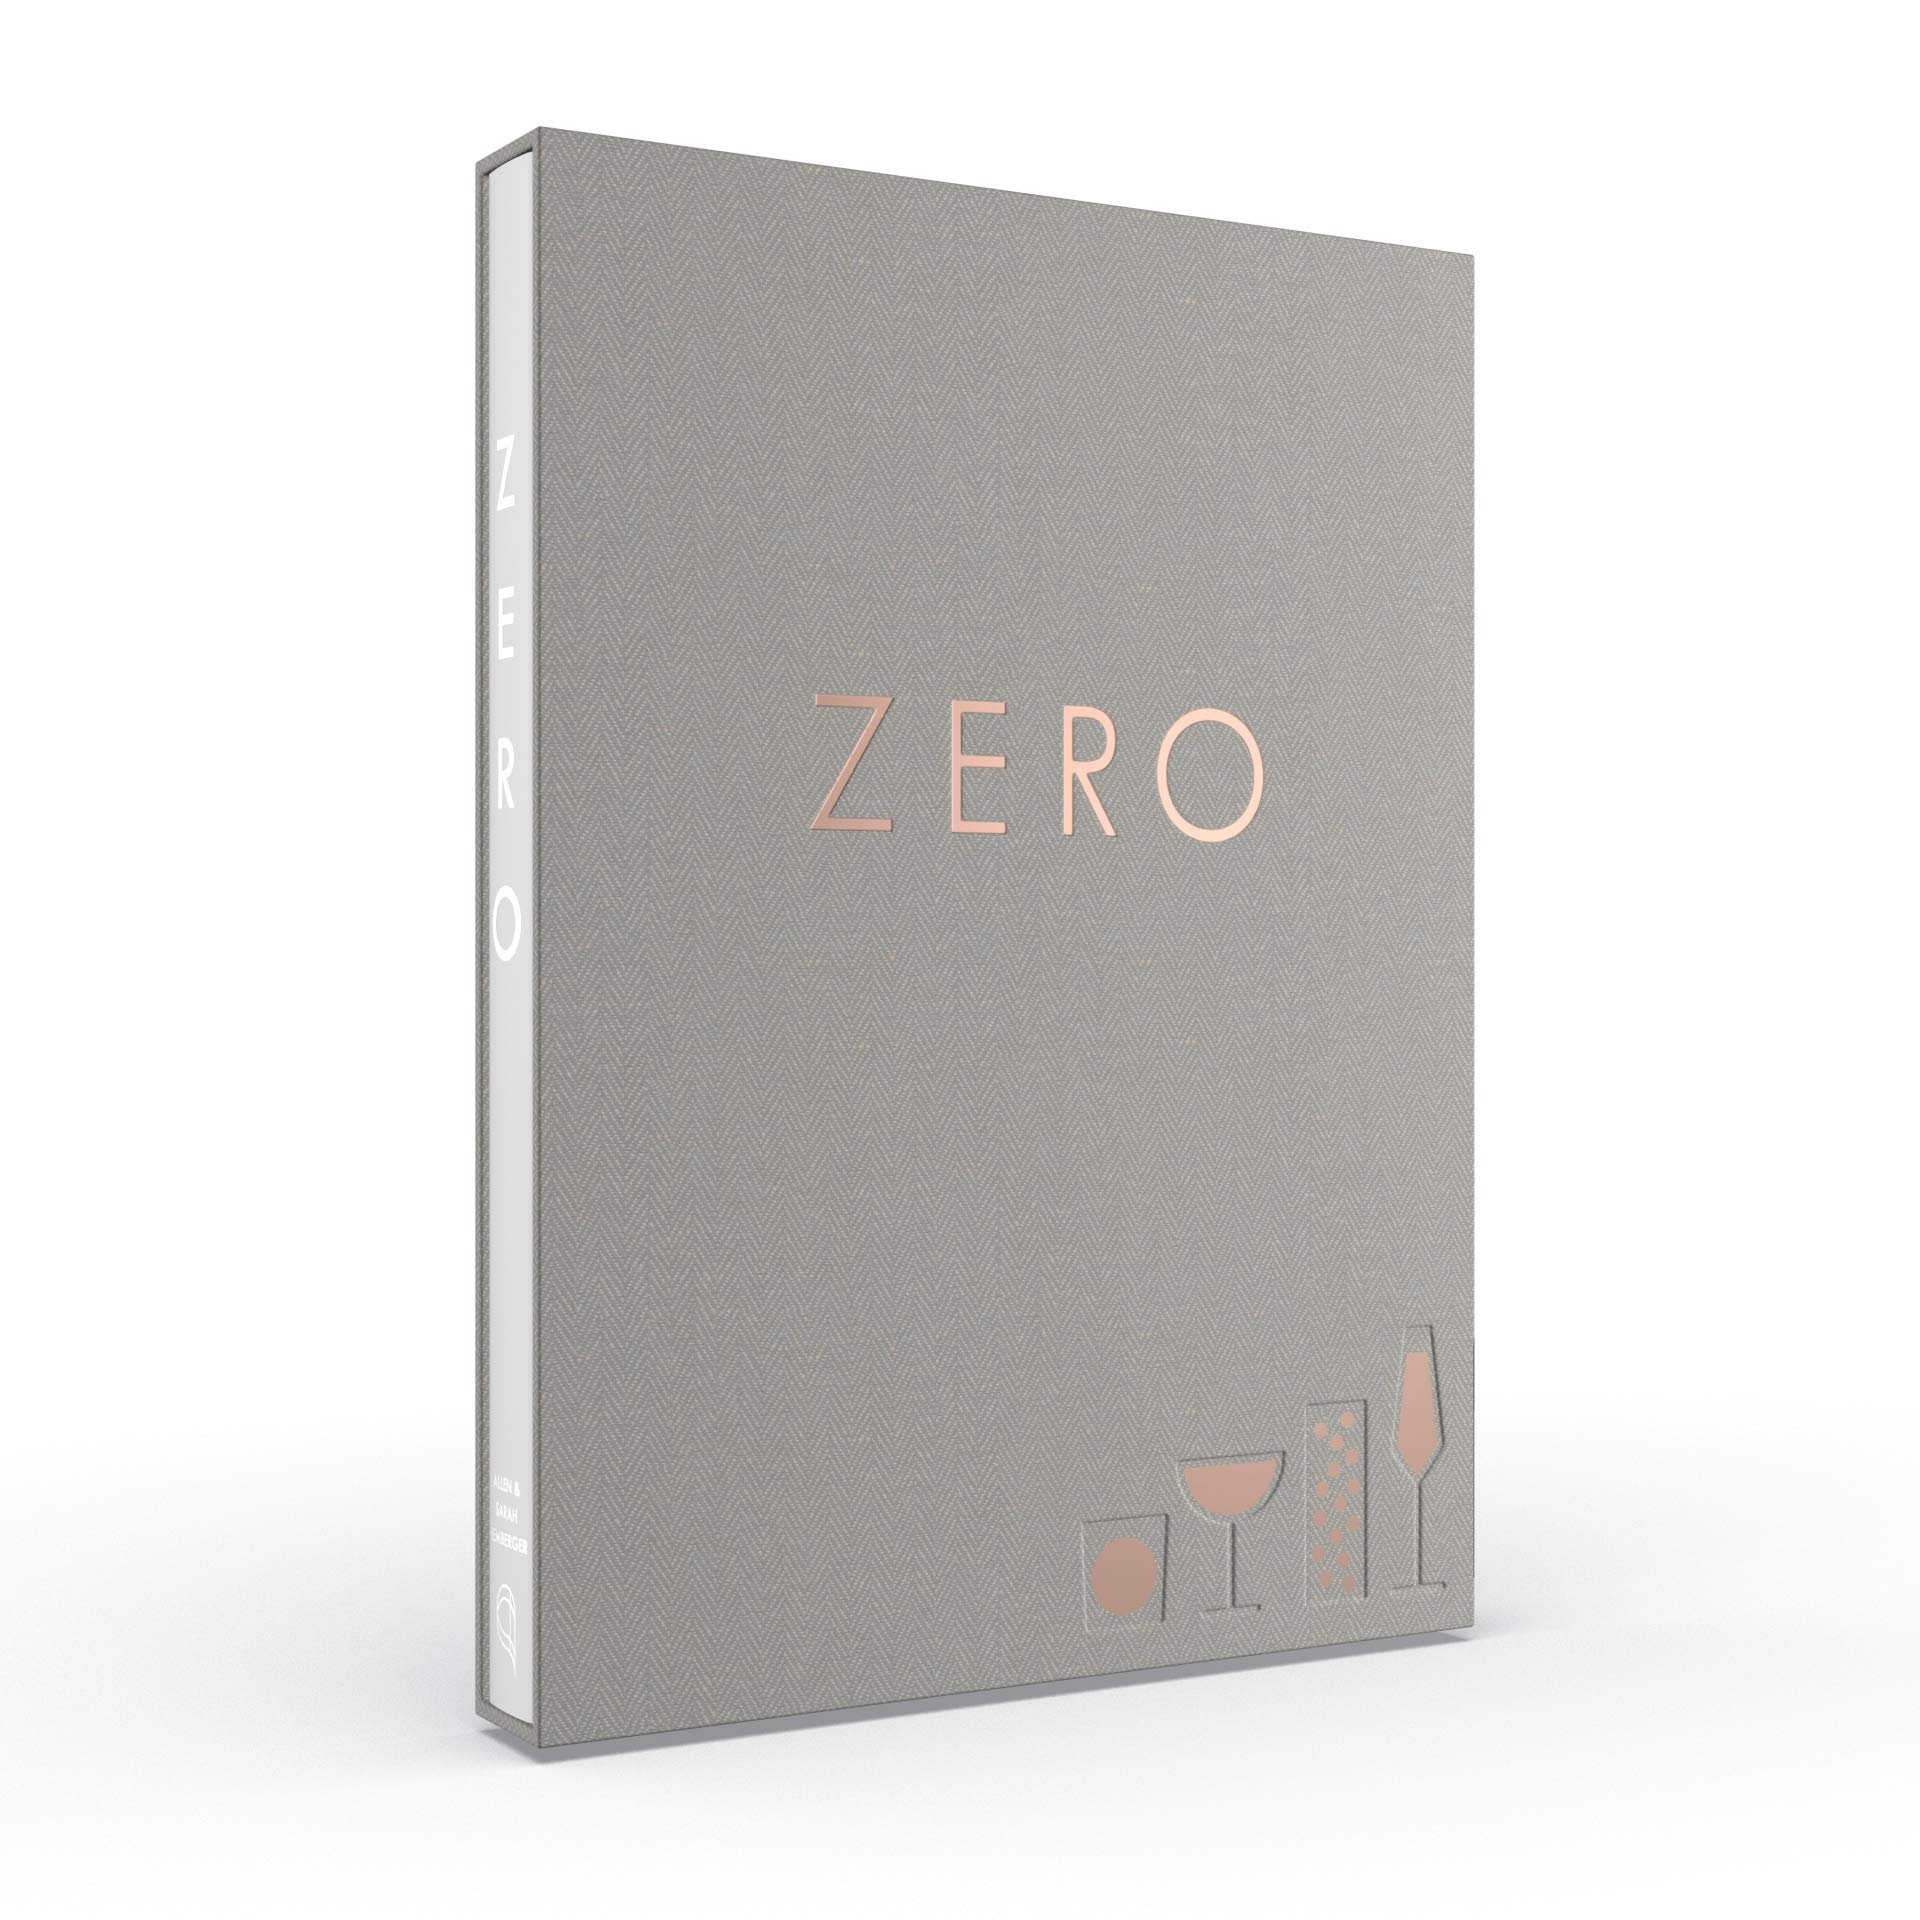 Zero: A New Approach